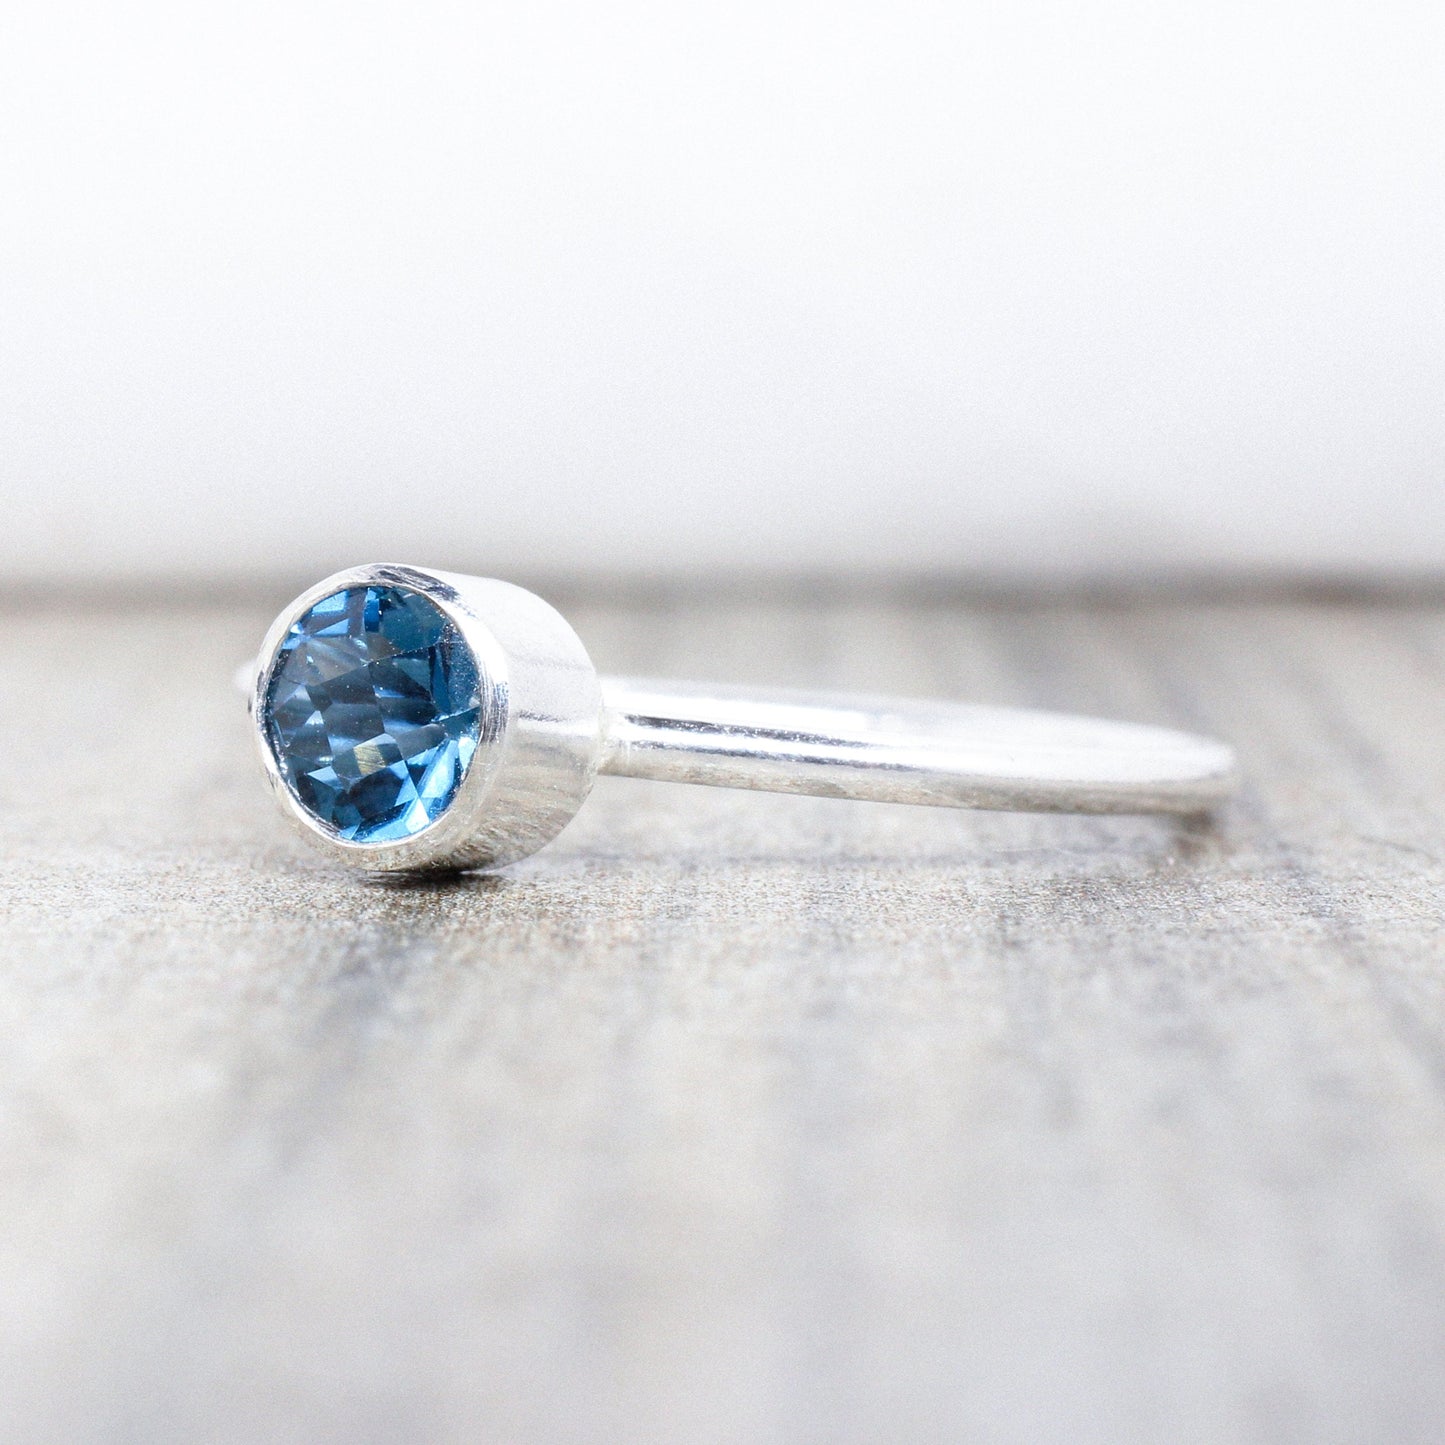 London Blue Topaz Ring in Sterling Silver // 5mm Faceted Gemstone December Birthstone